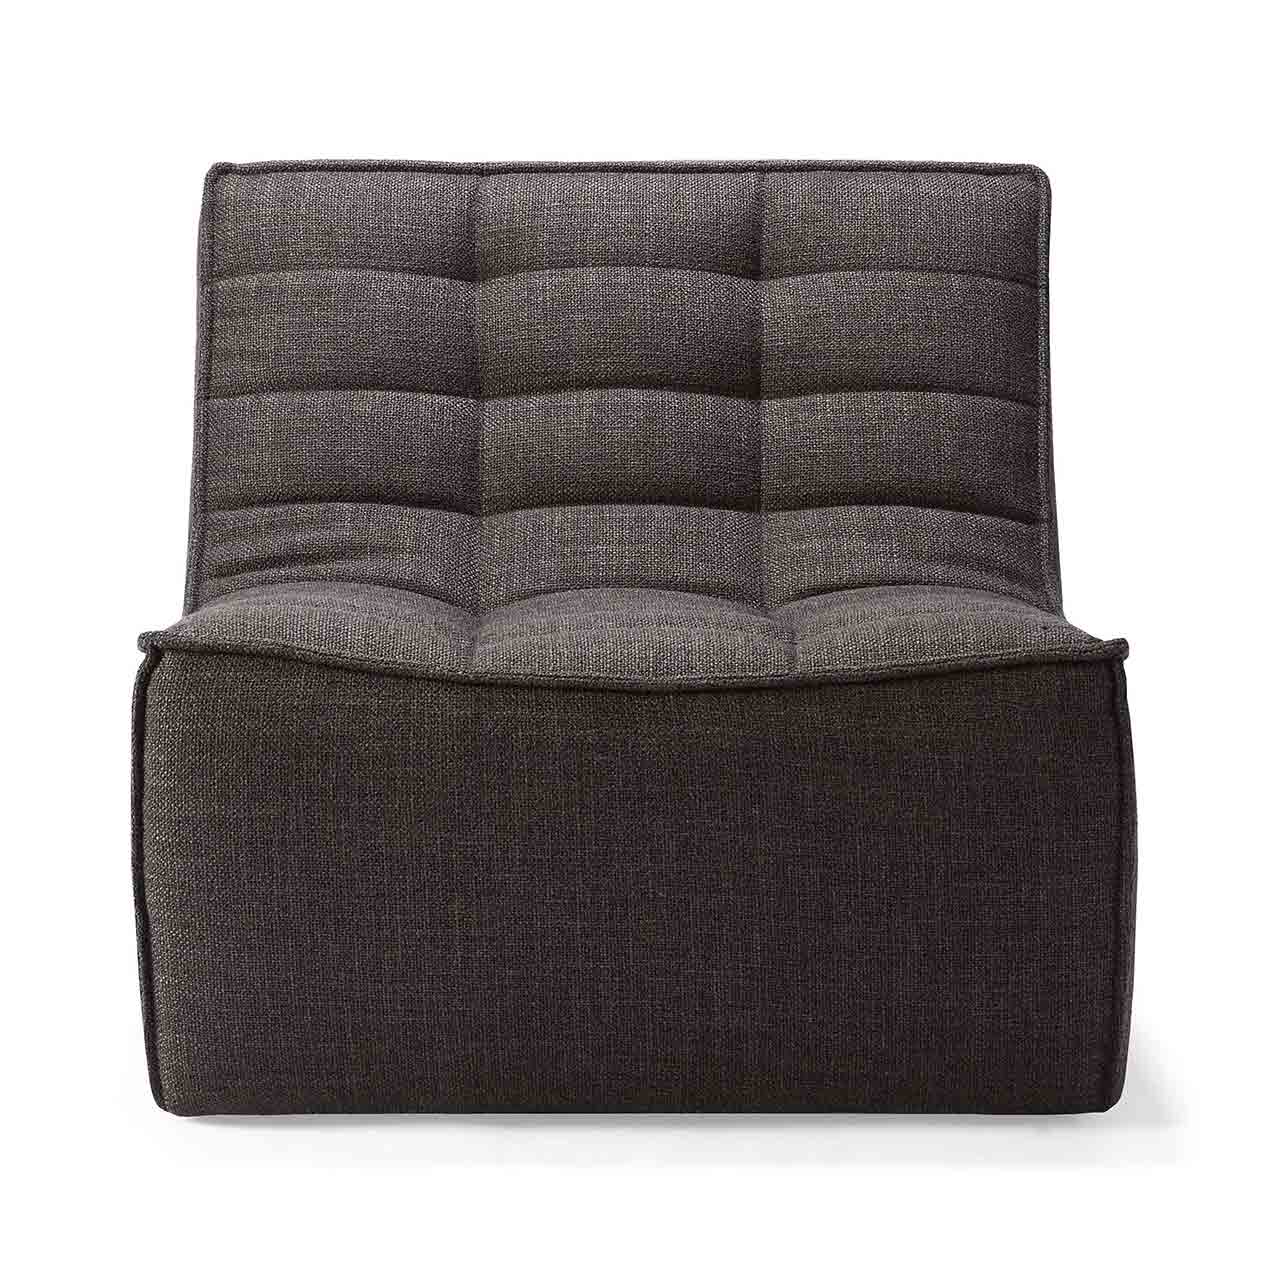 Sofa N701